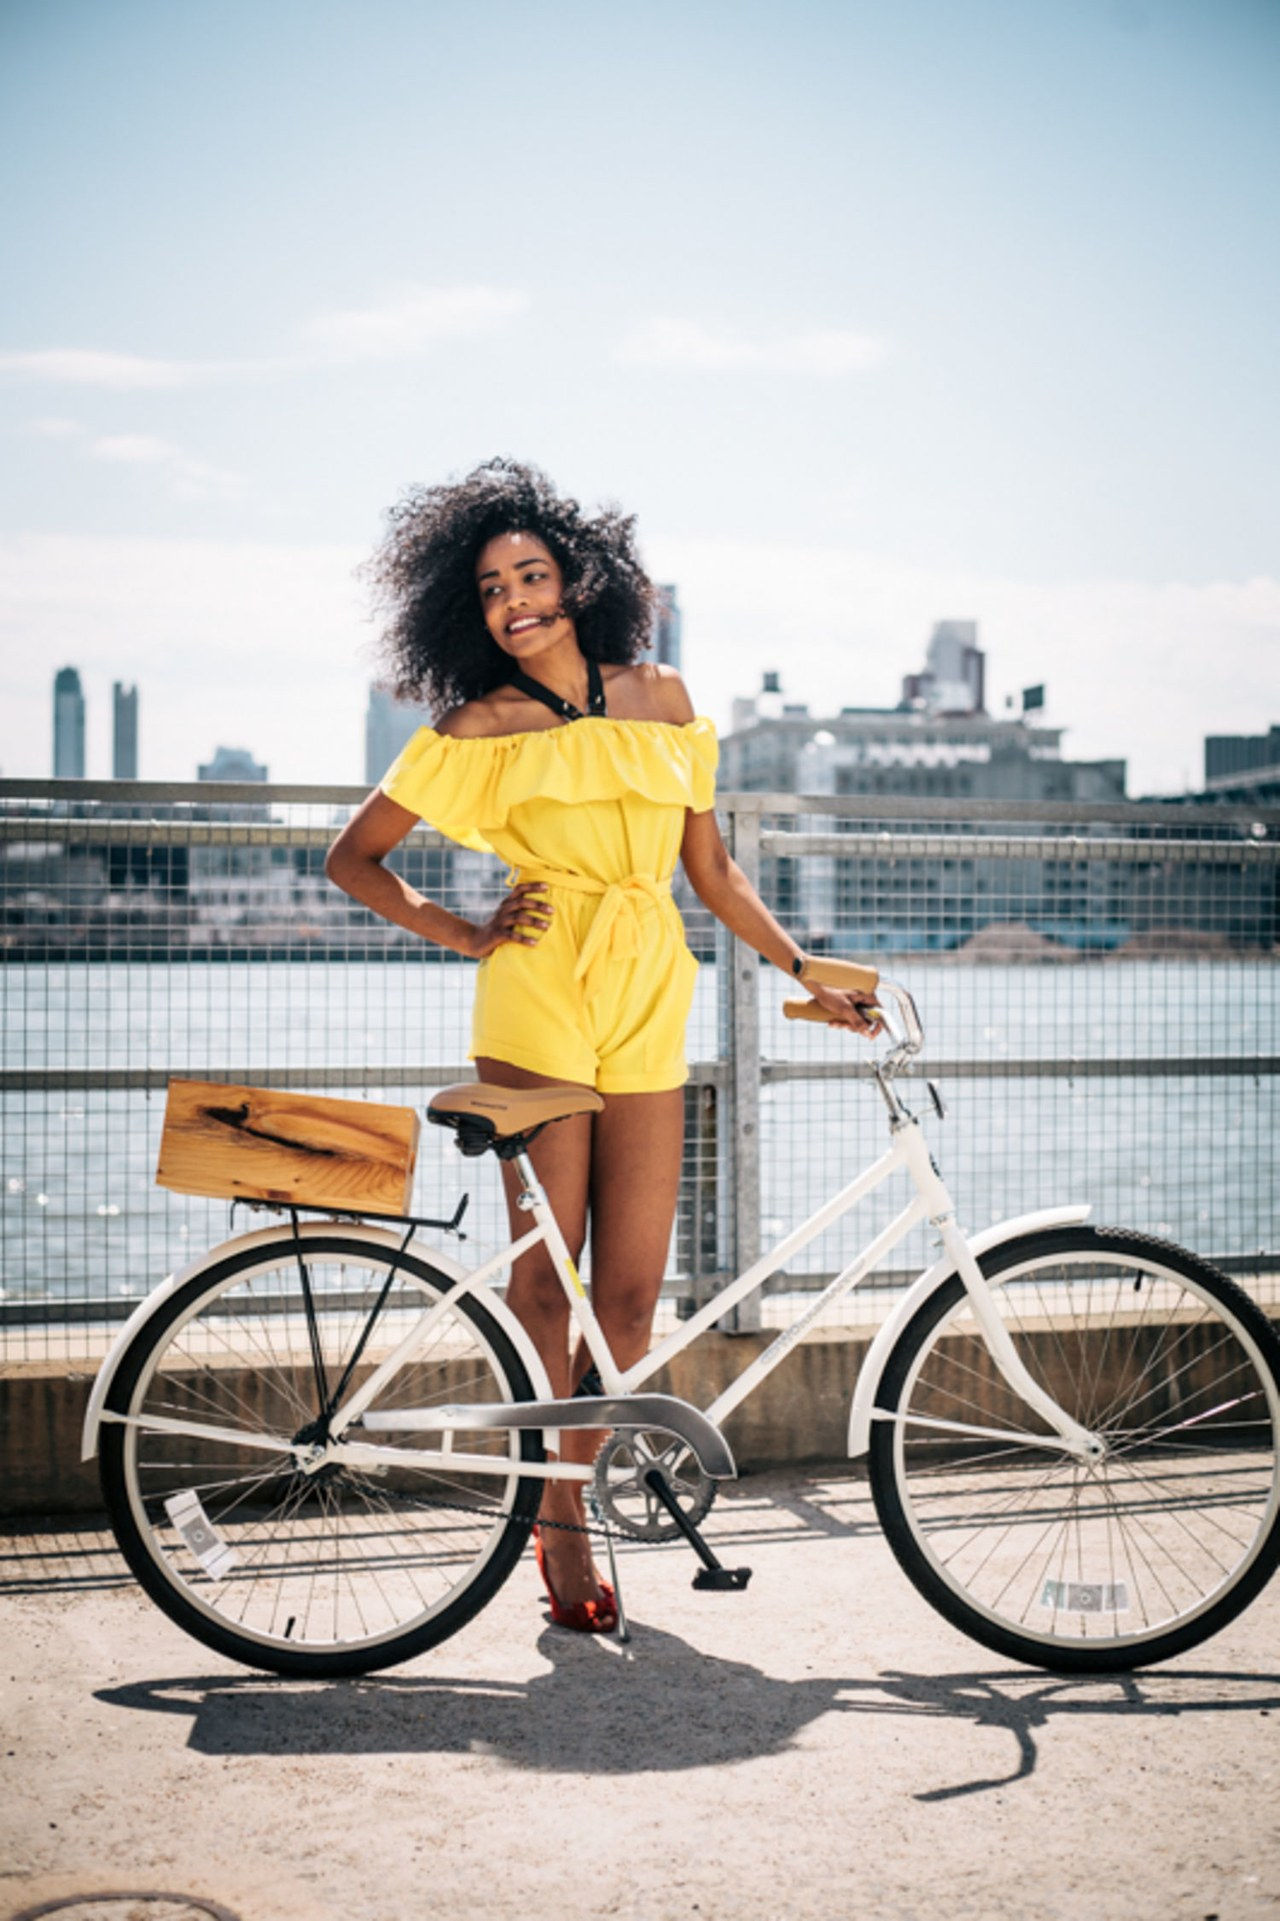 privilegiado mode girl on bike yellow romper